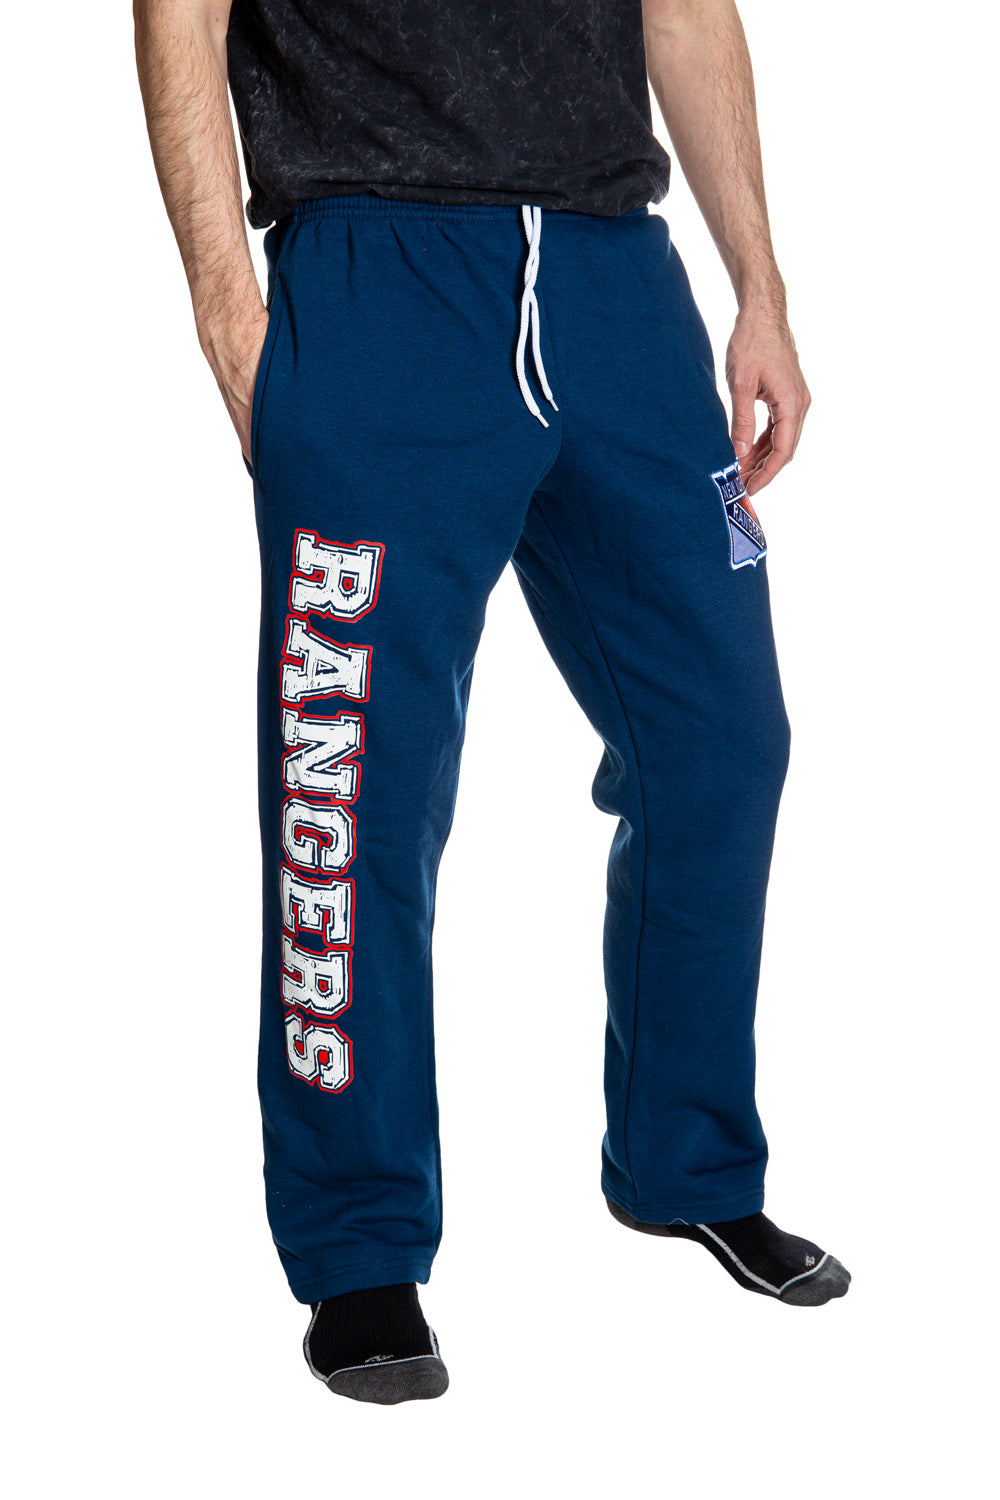 New York Rangers Premium Fleece Sweatpants Side View of Rangers Print.